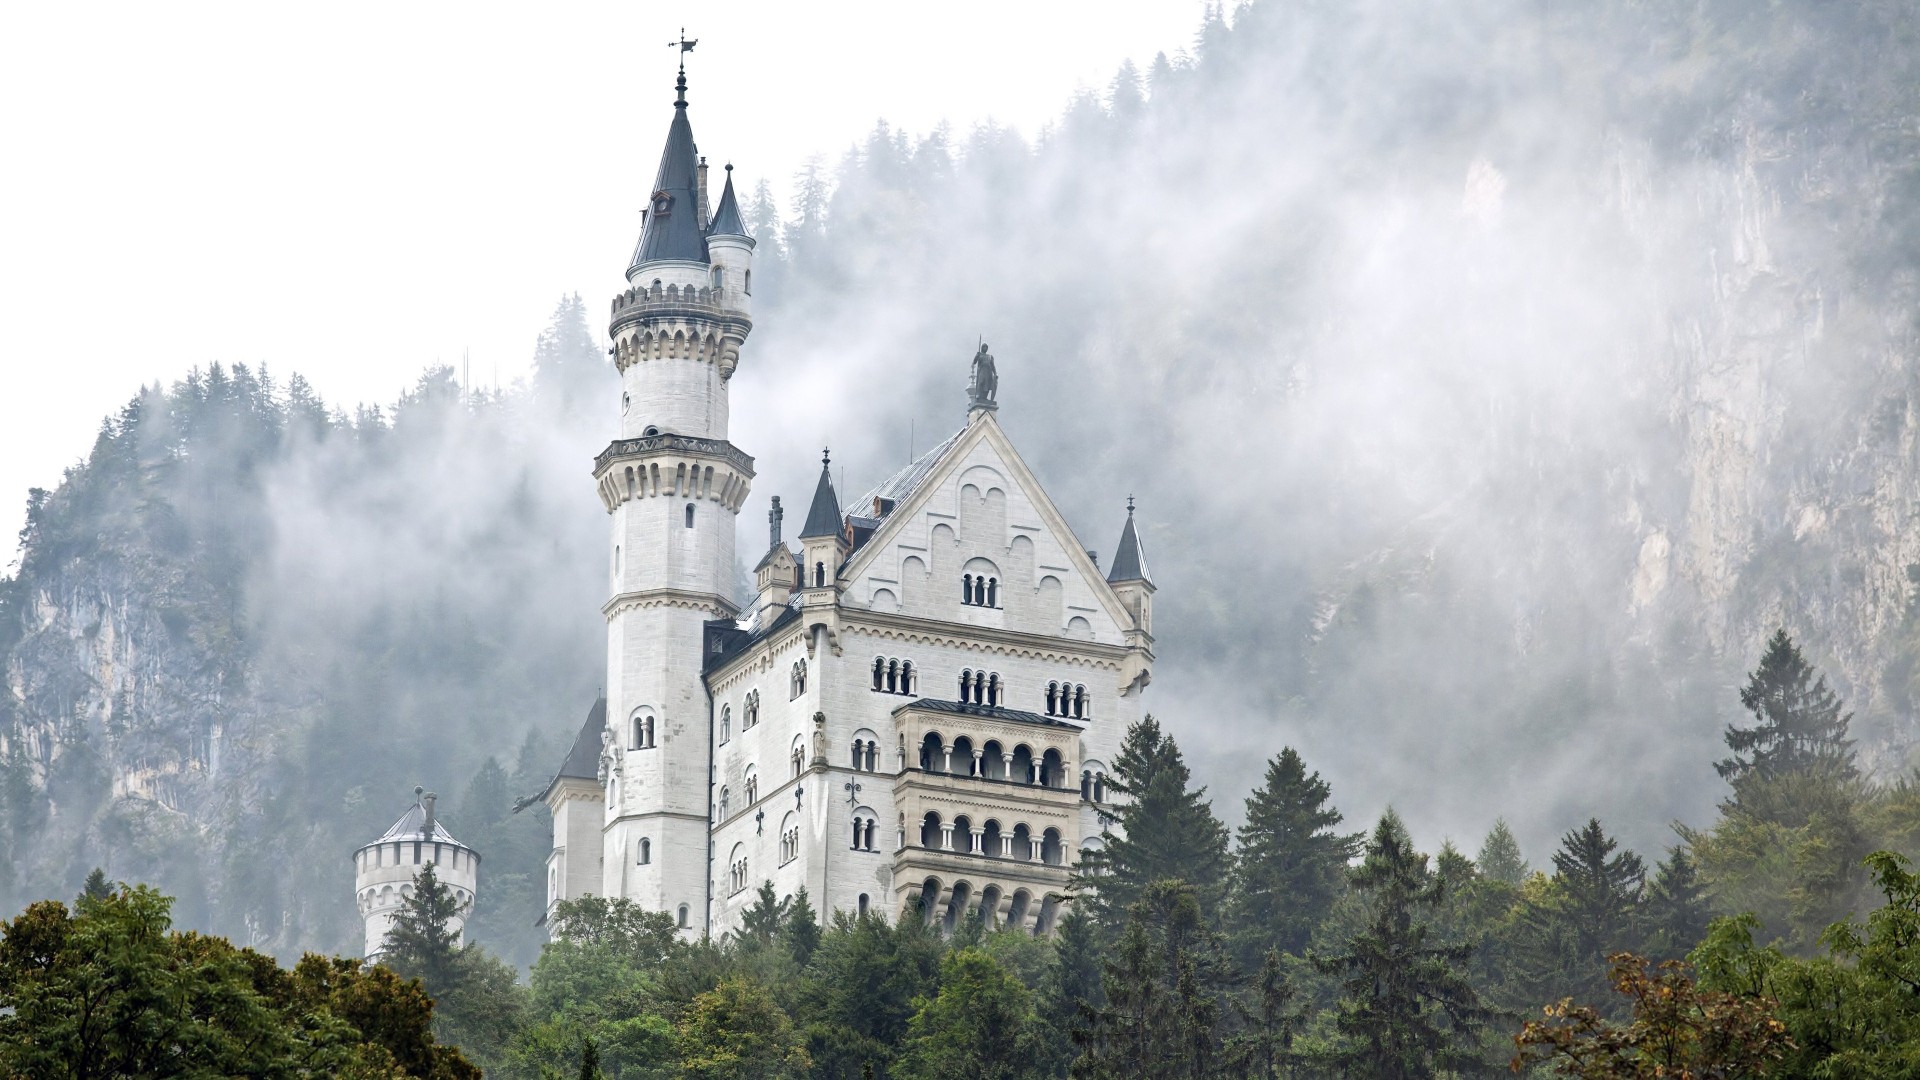 Нойшванштайн, замок, германия, лес, деревья, дым, Neuschwanstein castle, Germany, forest, trees, smoke (horizontal)